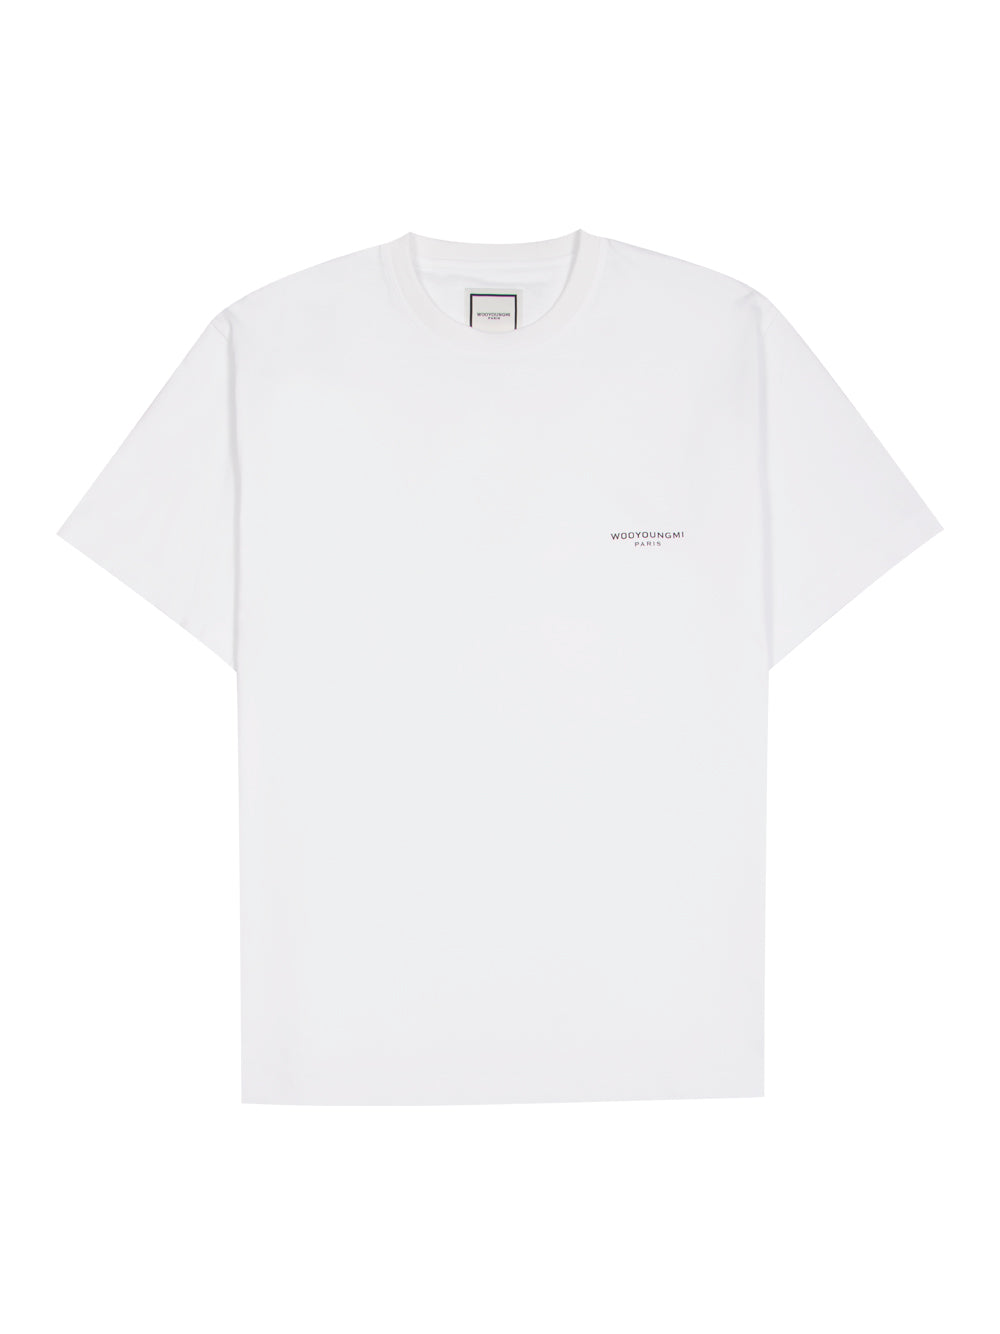 Cotton Square Label T-Shirt (White)